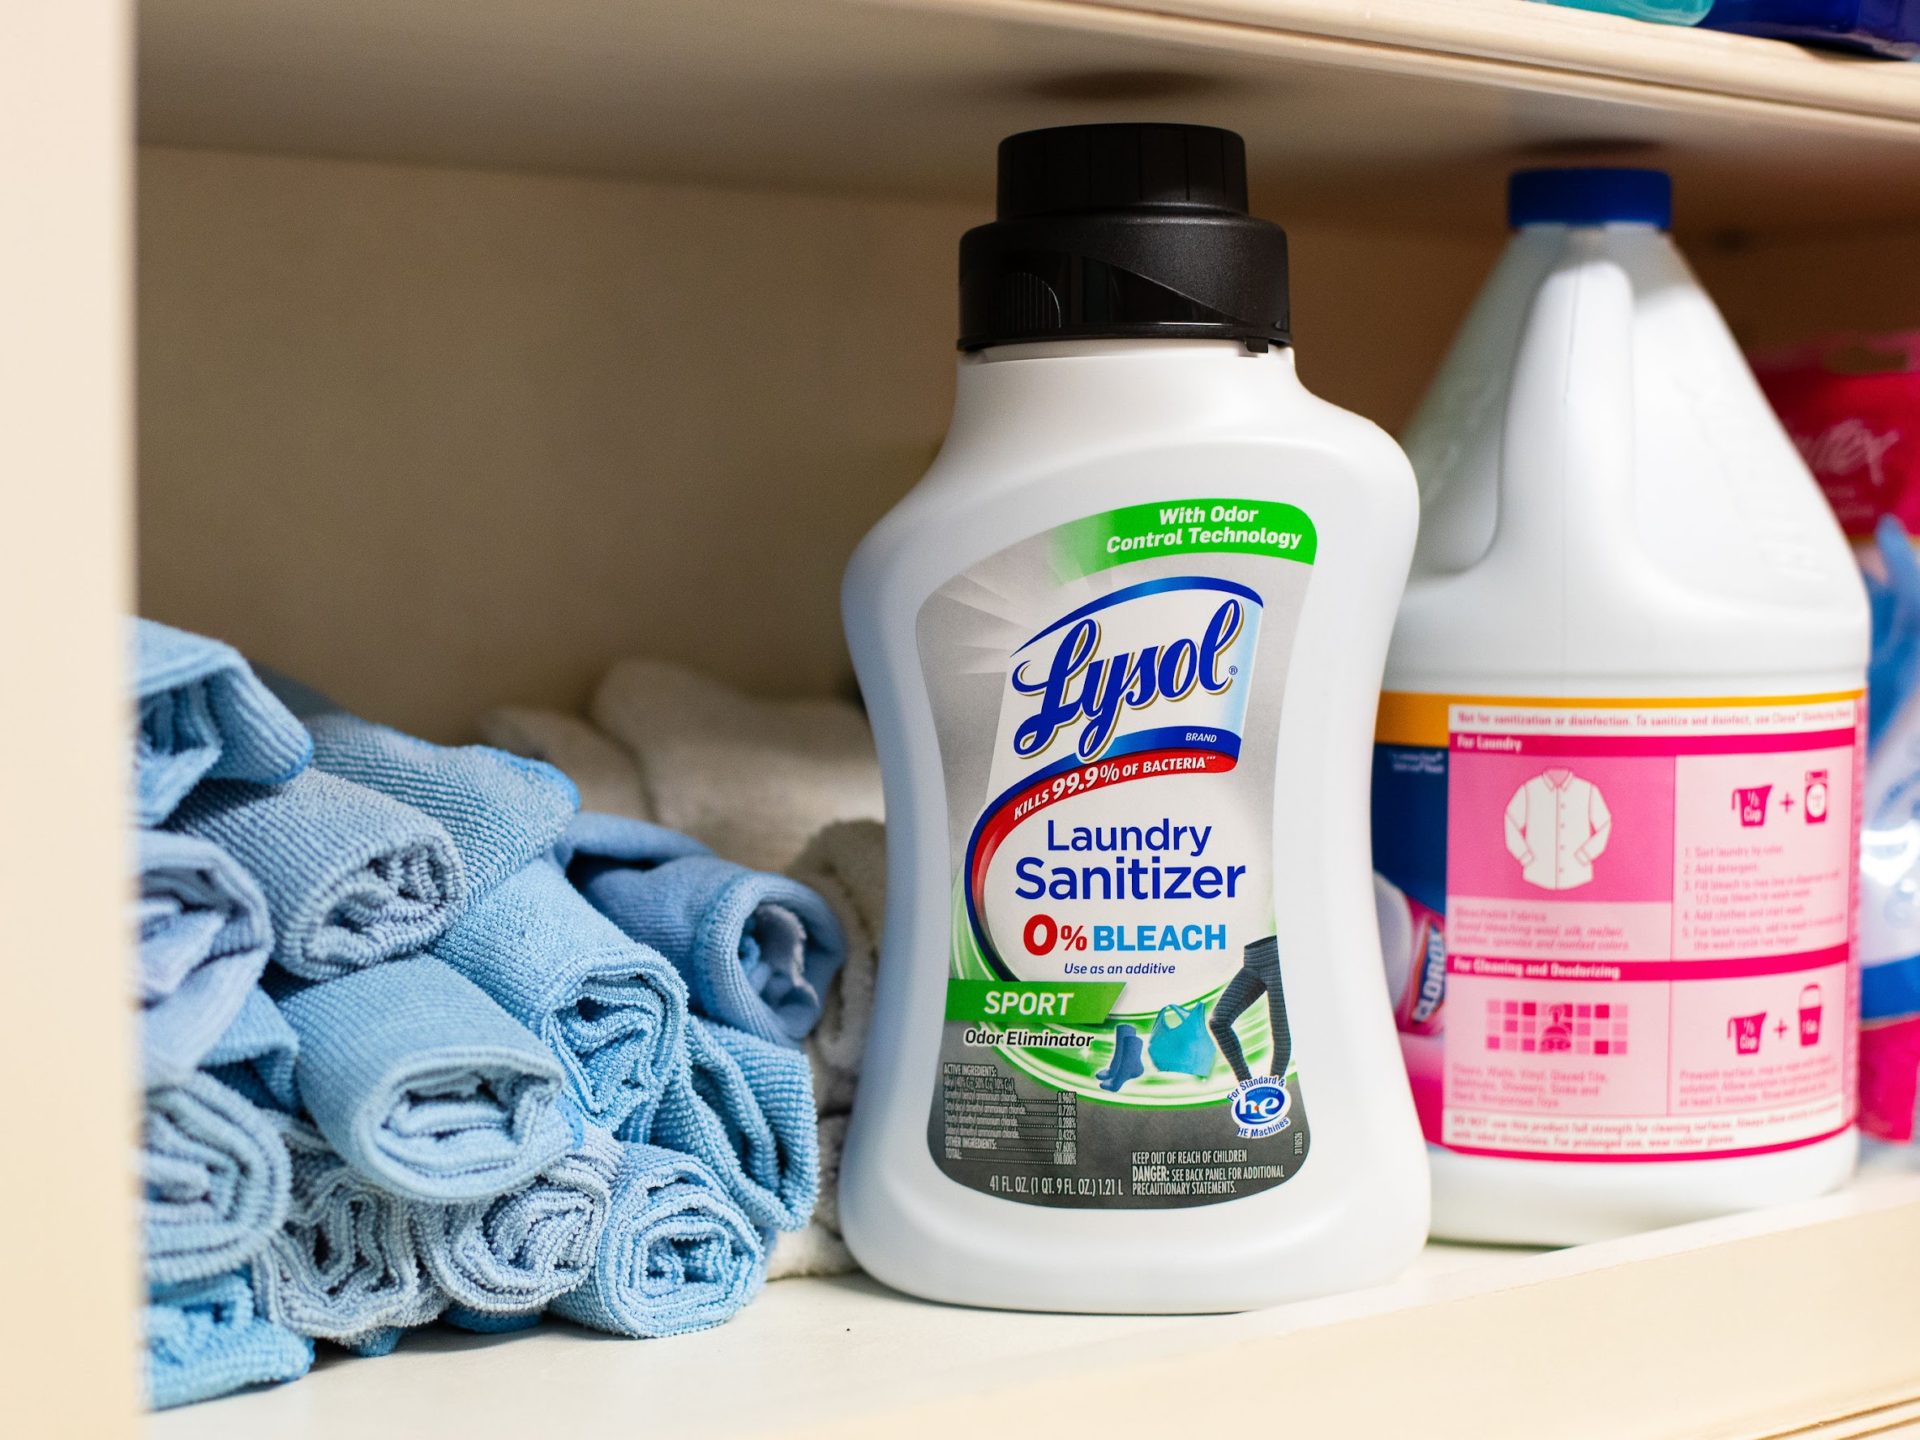 Lysol Laundry Sanitizer Just $3.74 At Kroger (Regular Price $7.49)